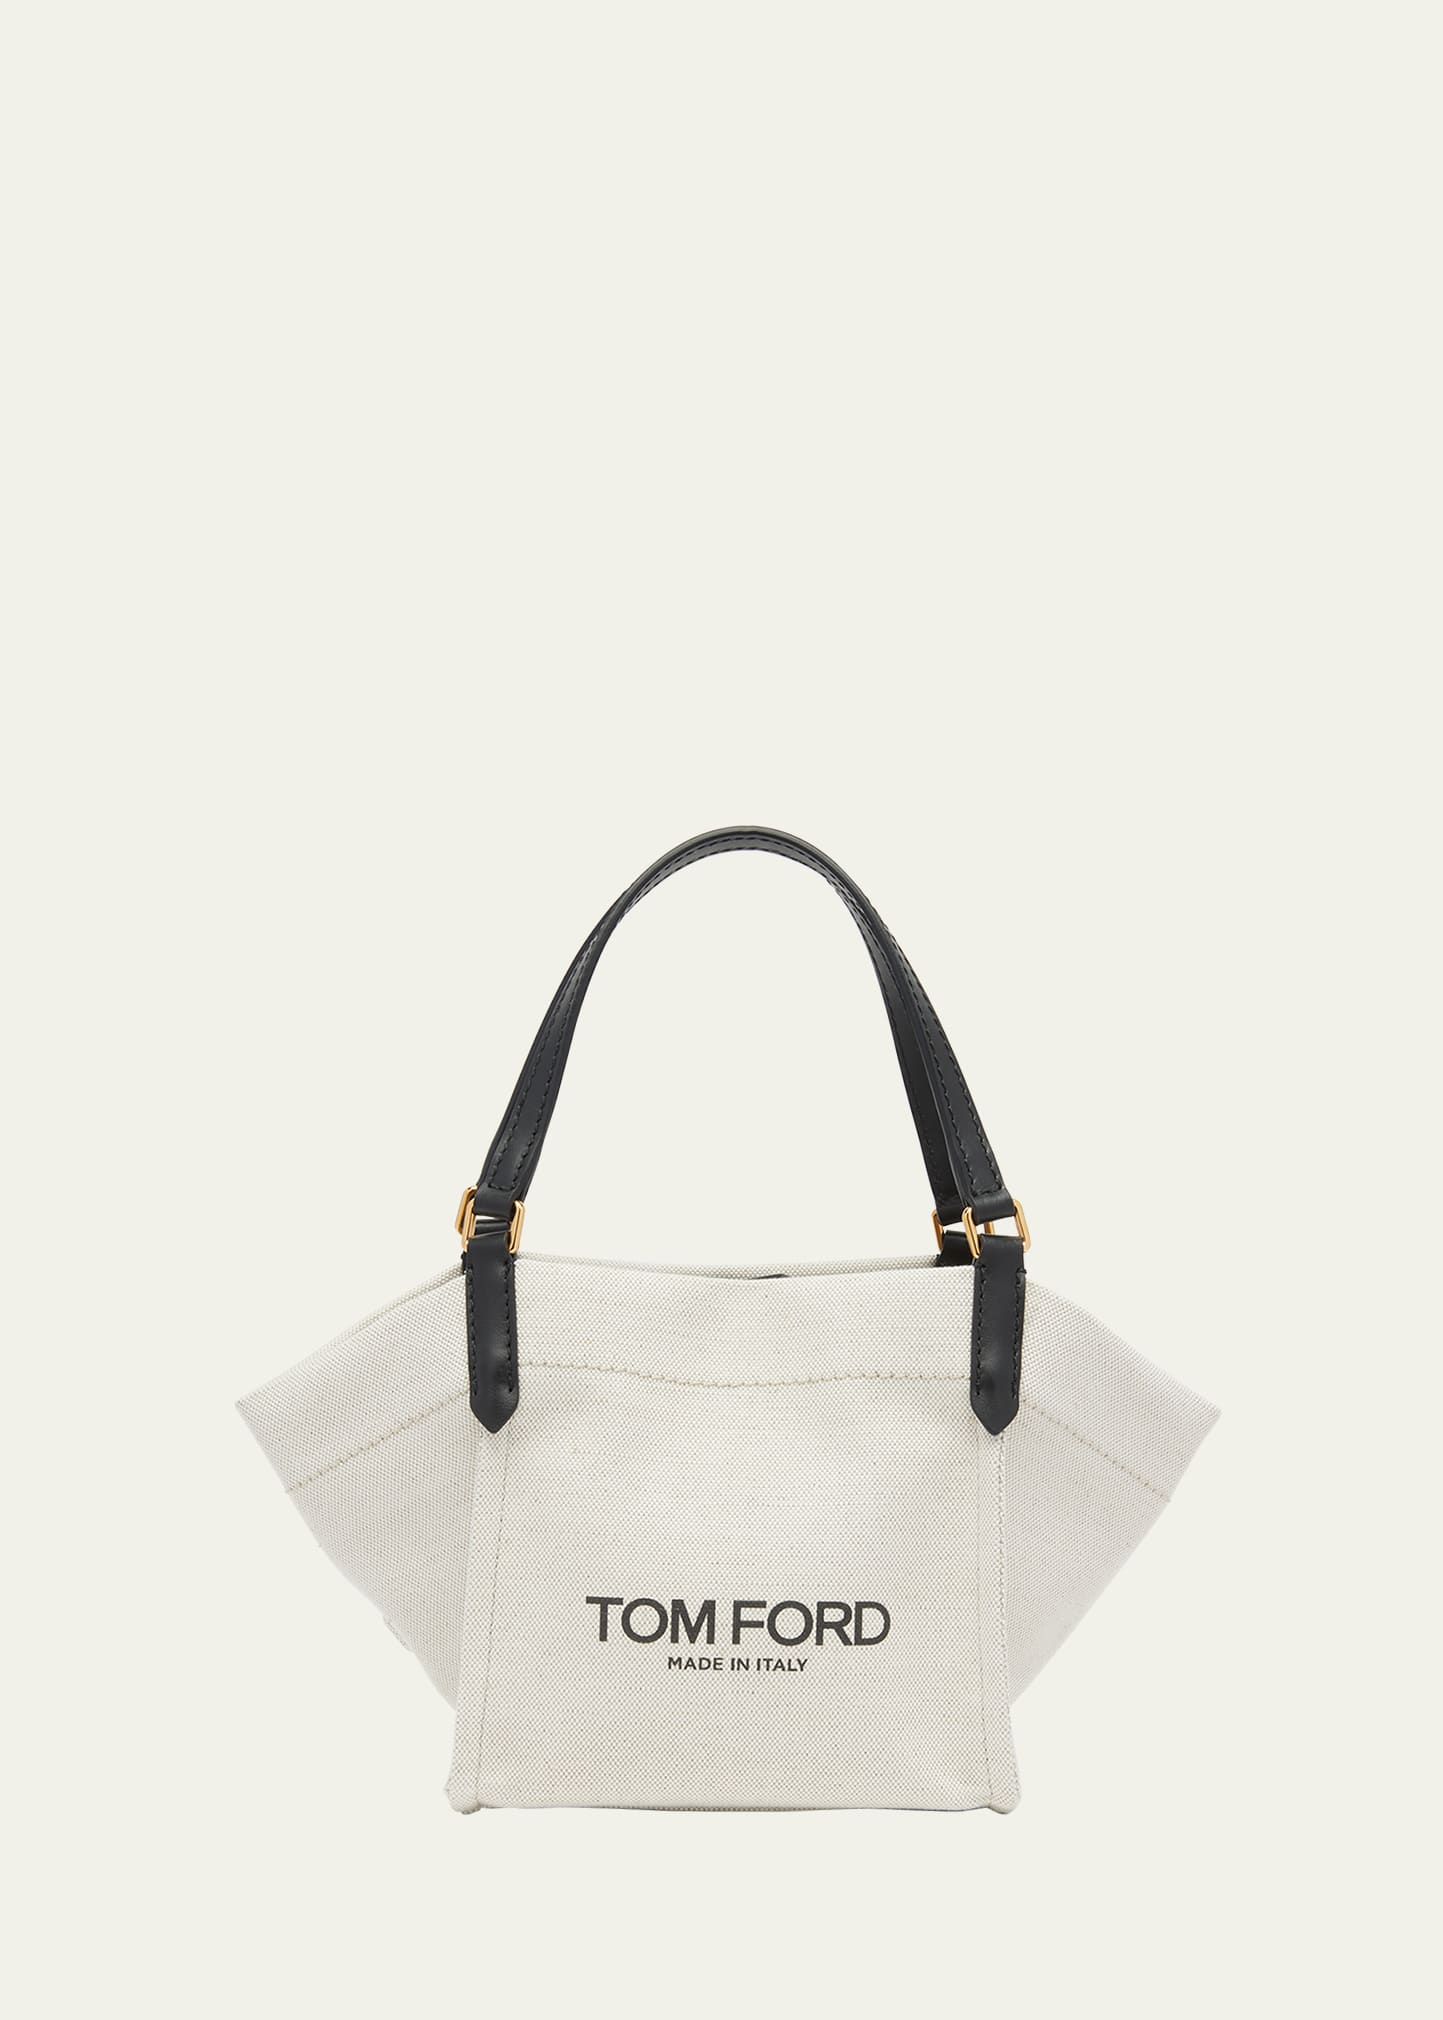 Tom Ford Animalier Mini T Screw Shopper Tote in Black and Brown